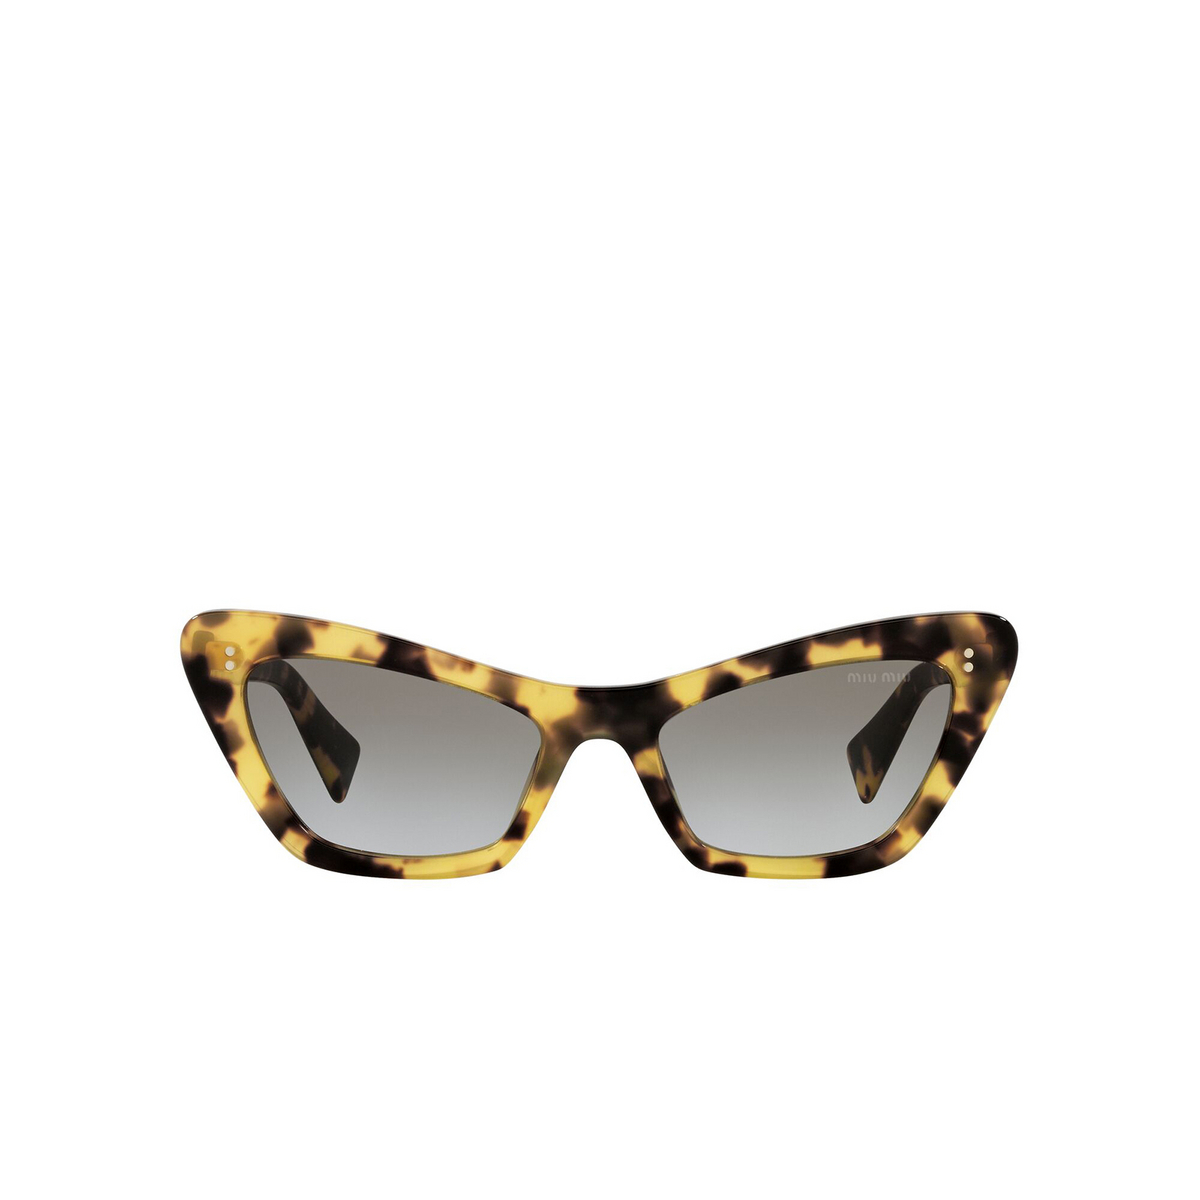 Miu Miu® Cat-eye Sunglasses: MU 03XS color Light Havana 7S00A7 - front view.